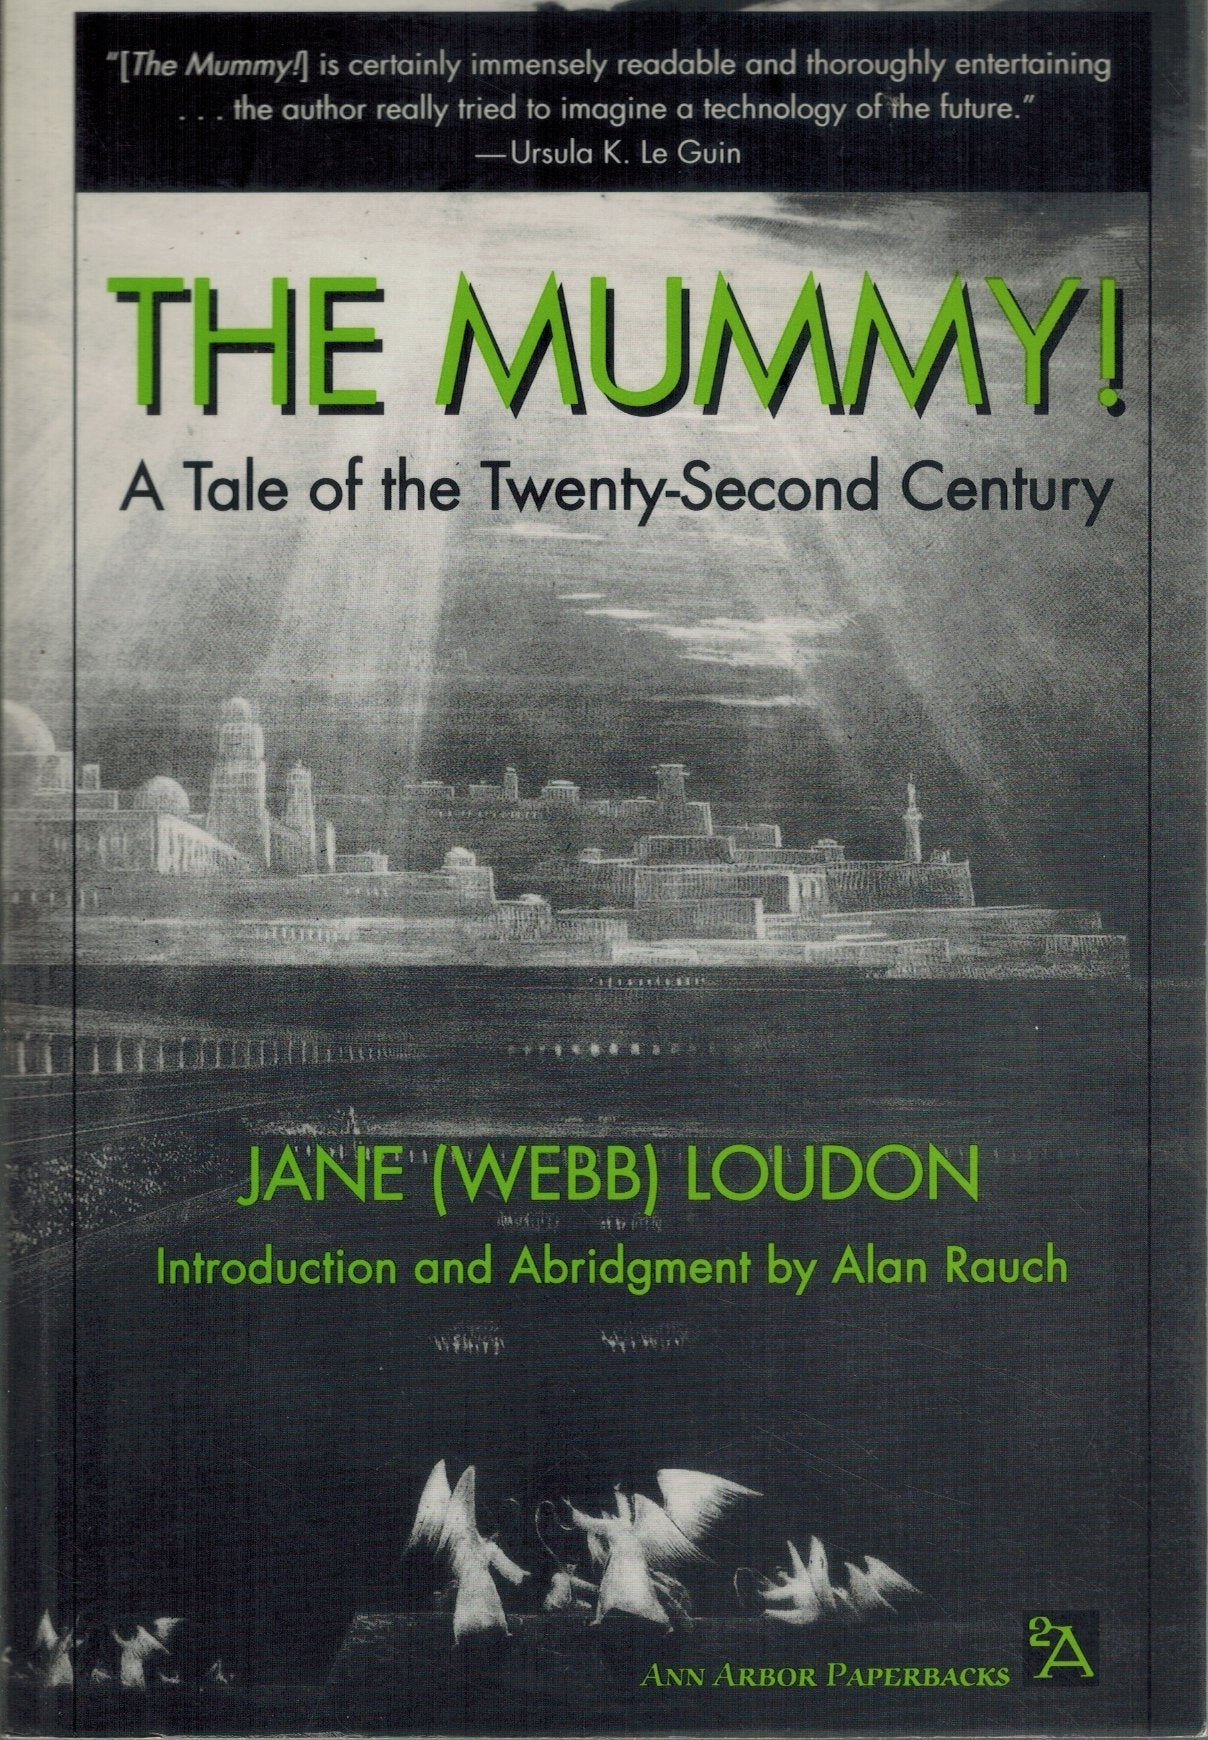 The Mummy!  A Tale of the Twenty-Second Century  by Loudon, Jane (Webb) & Alan Rauch